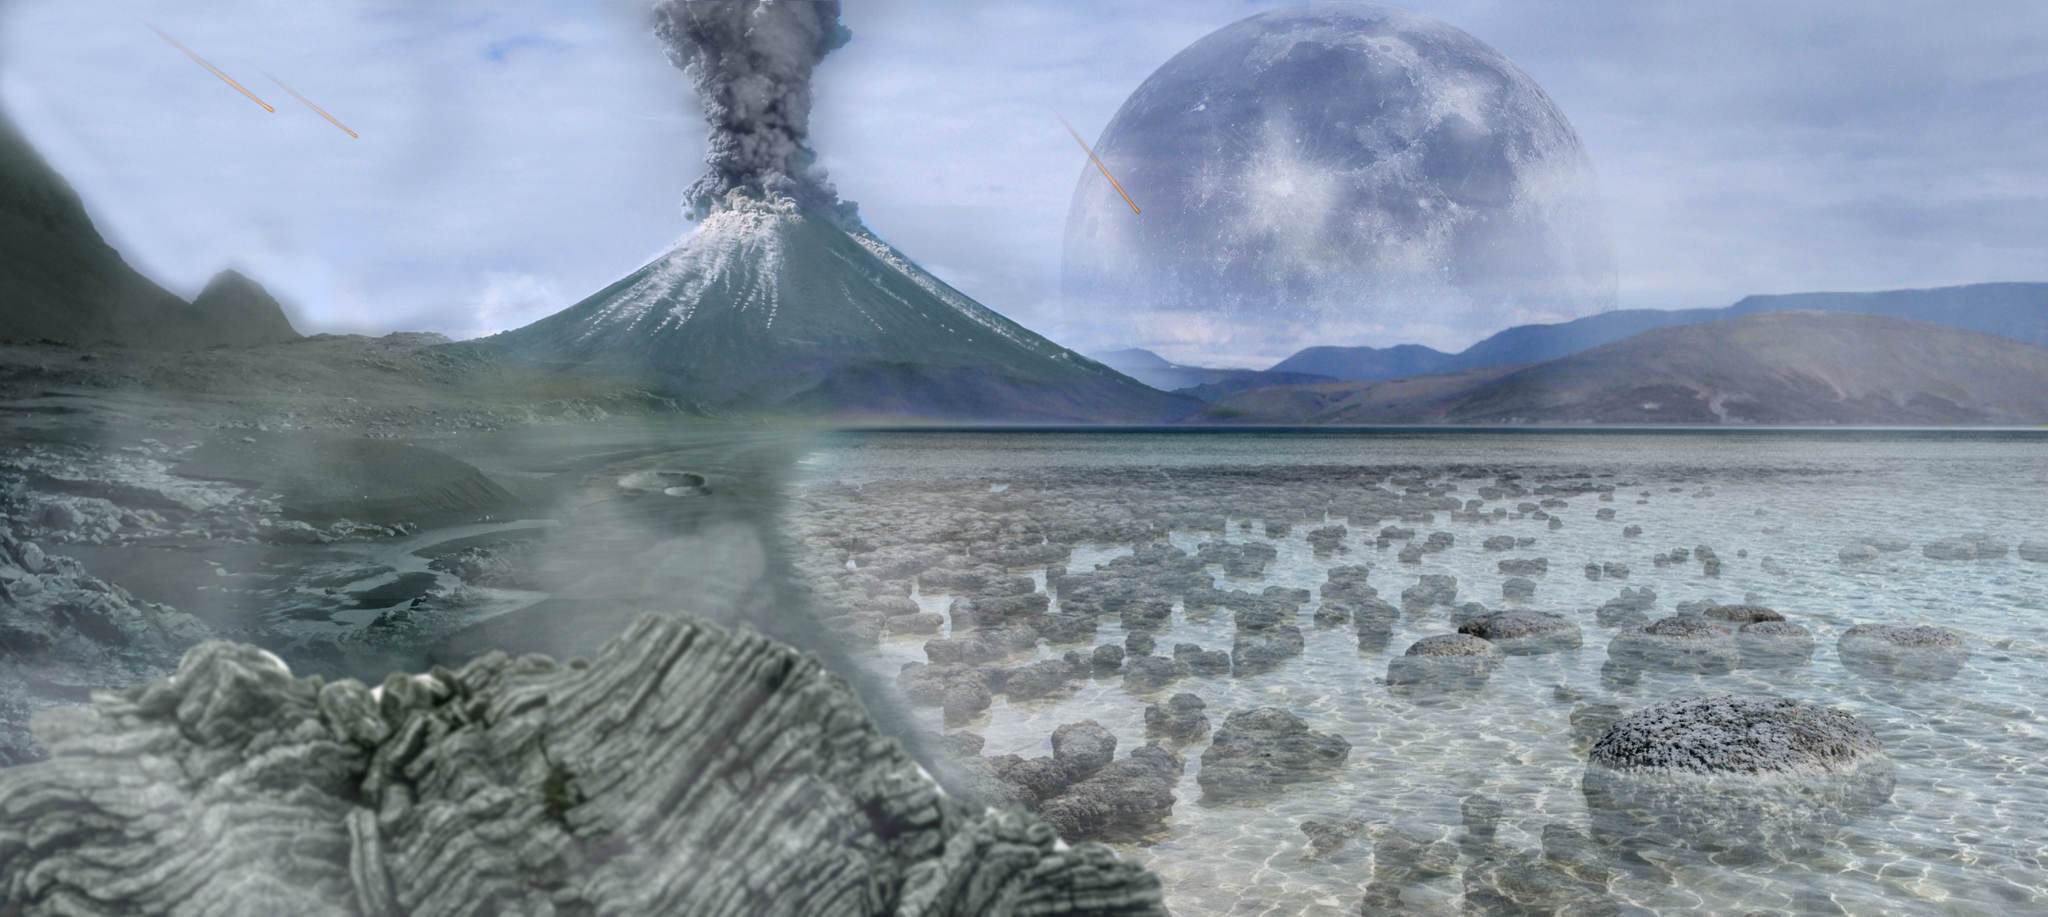 It shows volcanoes, impacts, and stromatolites.